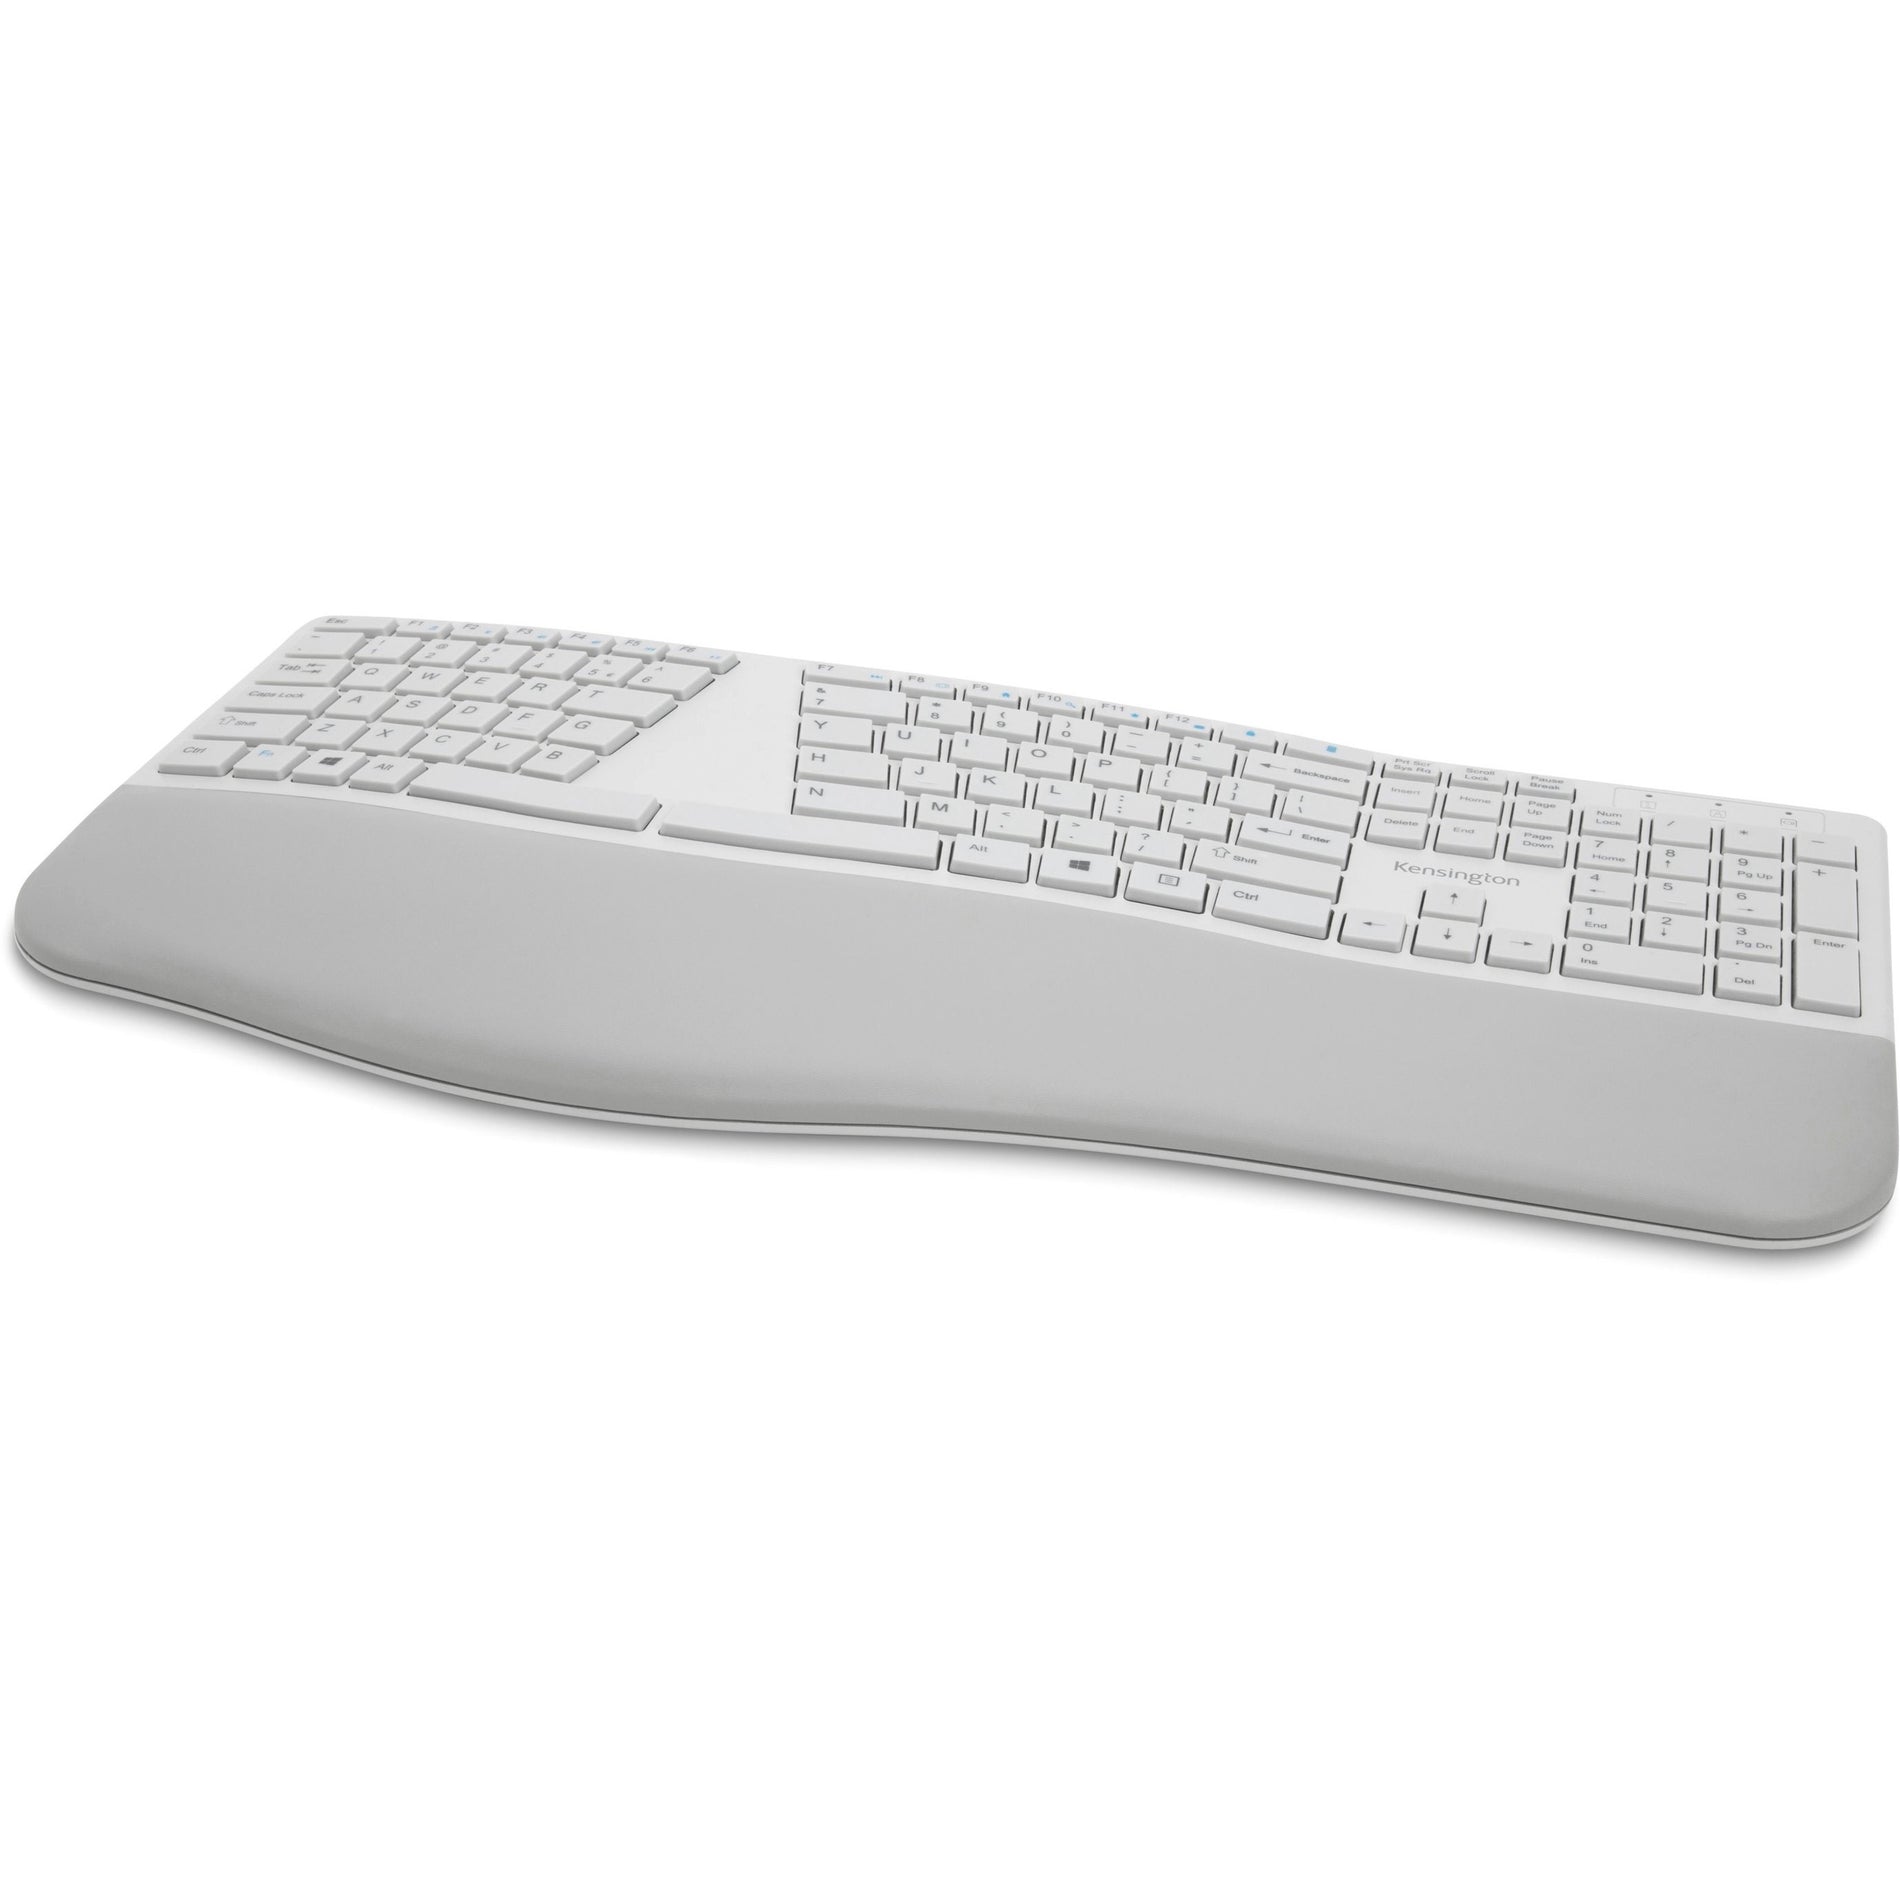 Kensington K75402US Pro Fit Ergo Wireless Keyboard-Gray, Bluetooth/RF, USB Interface